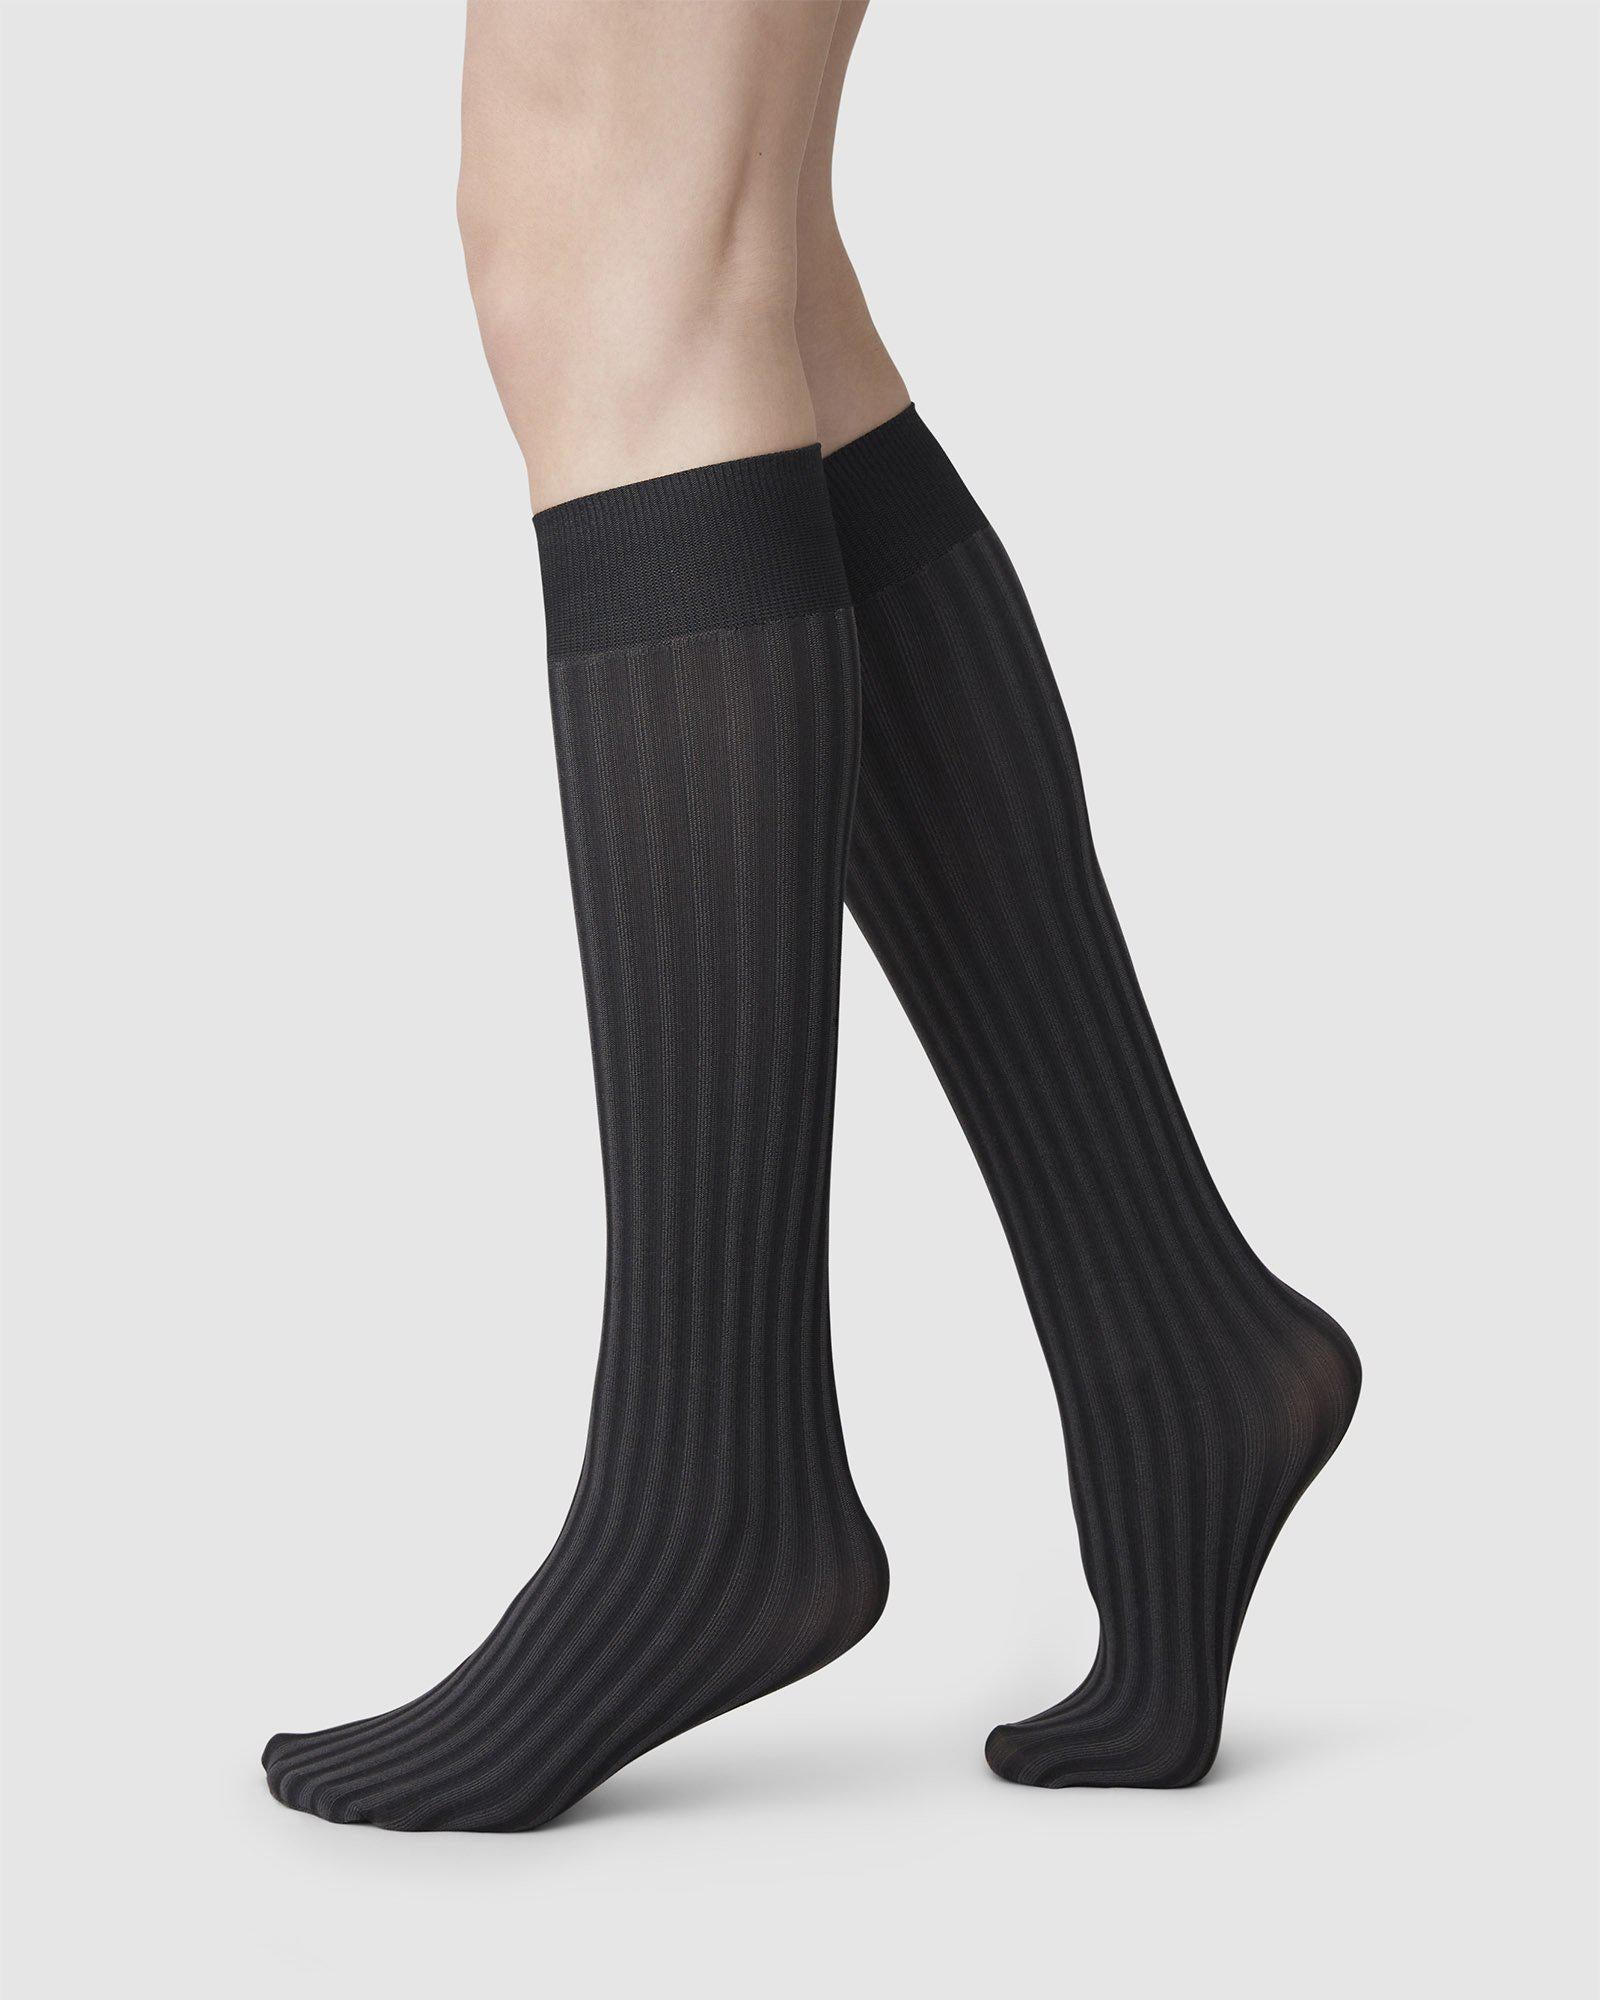 Hilda Knee-highs Black 80 den | Buy now - Swedish Stockings